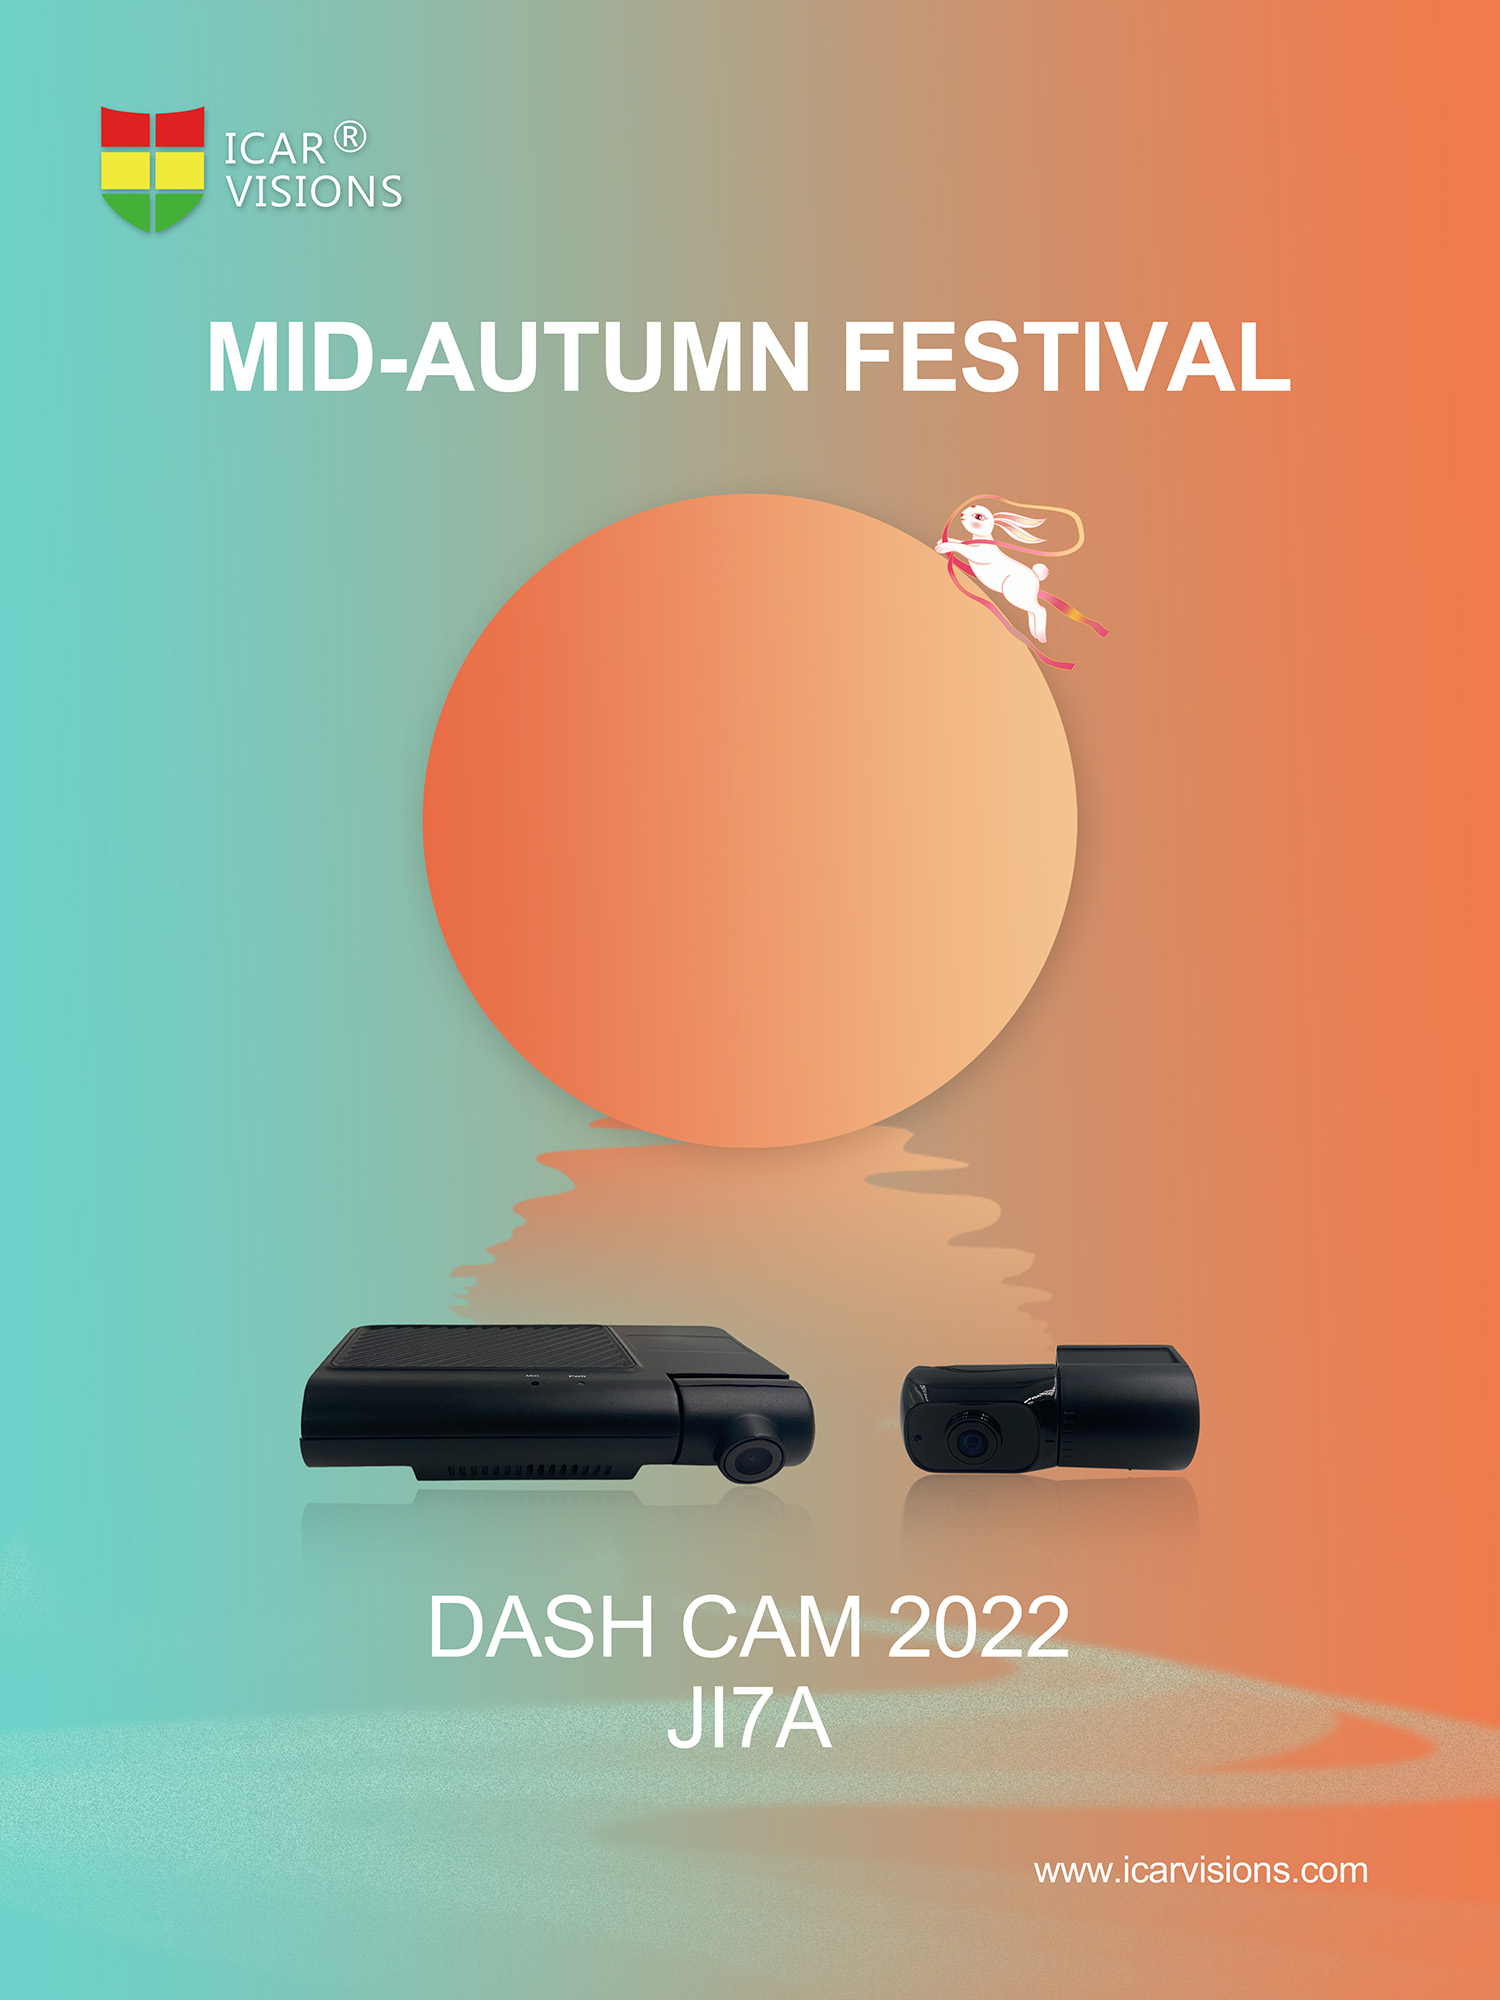 ICAR: Happy Mid-Autumn Moon Festival 2022 Picture1